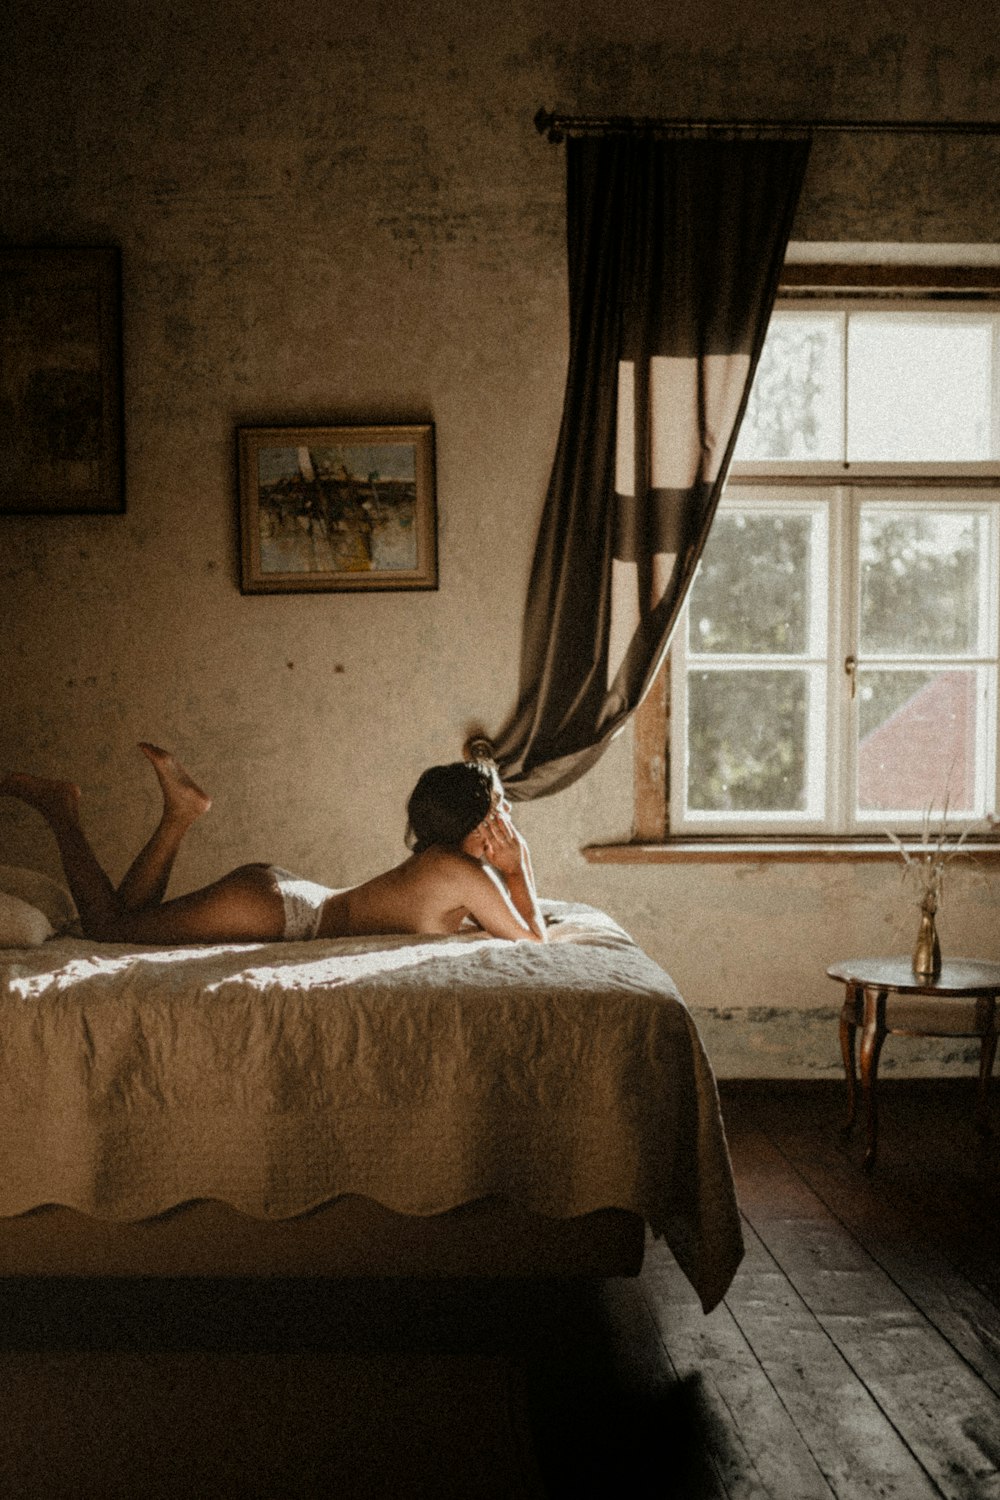 550+ Menina na cama Fotos | Baixe imagens gratis no Unsplash